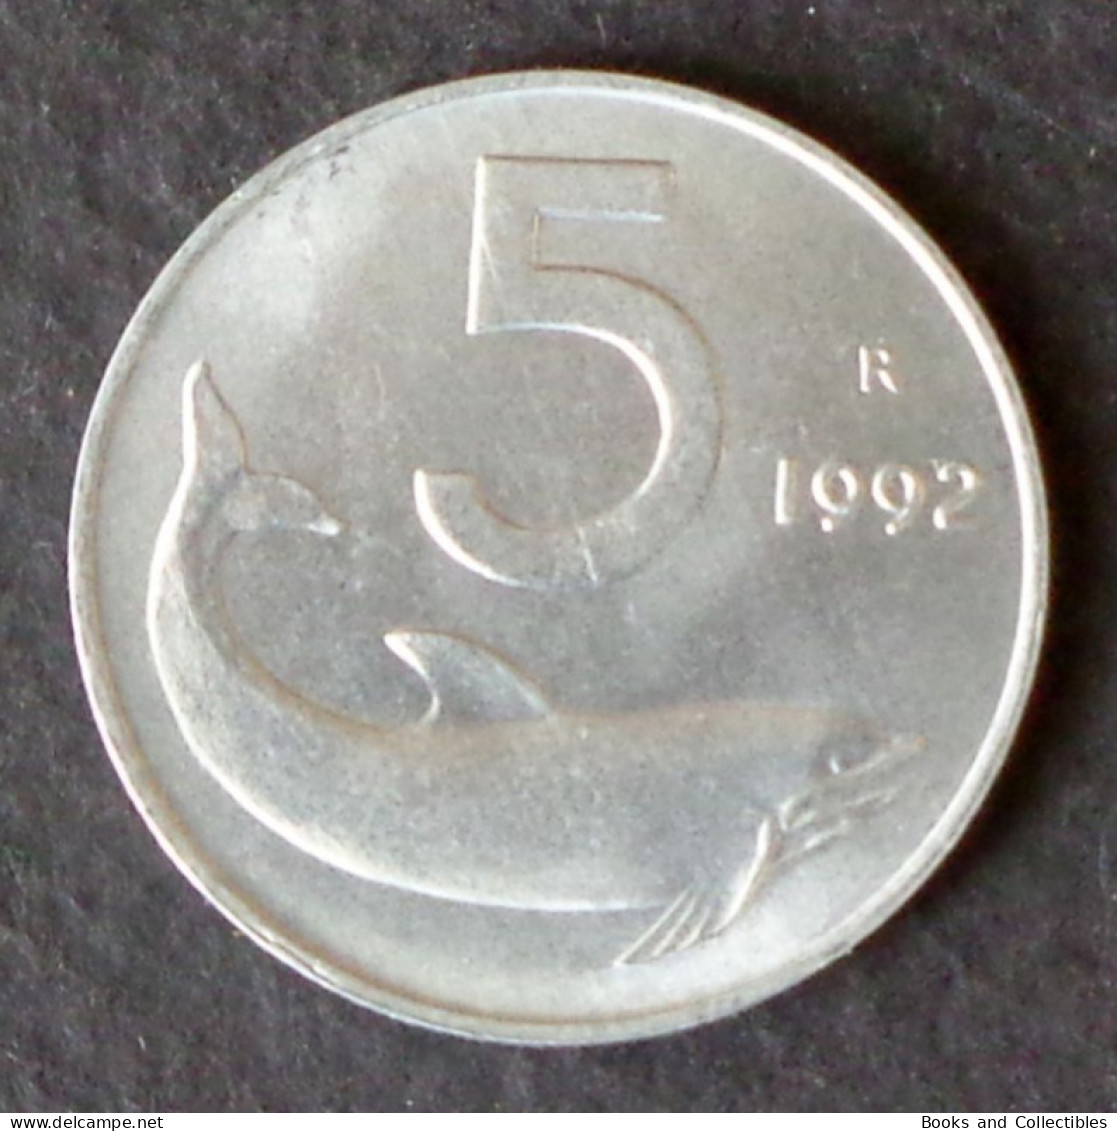 ITALY - 5 Lira 1992 - KM# 92 * Ref. 0197 - 5 Liras